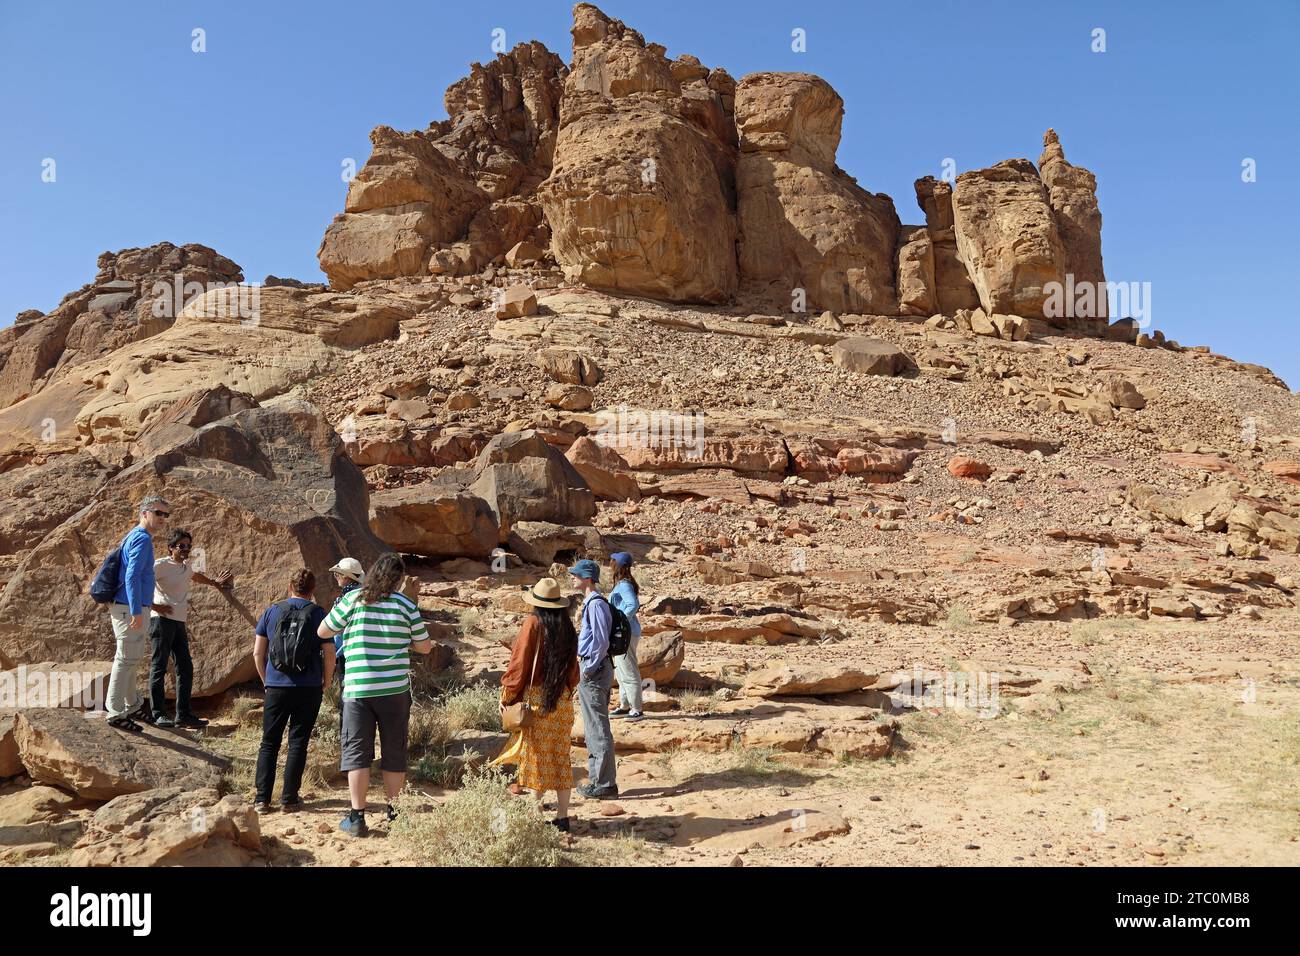 Tourists finding petroglyphs at Umm Sinman Mountain in the Great Narfoud Desert of Saudi Arabia Stock Photo